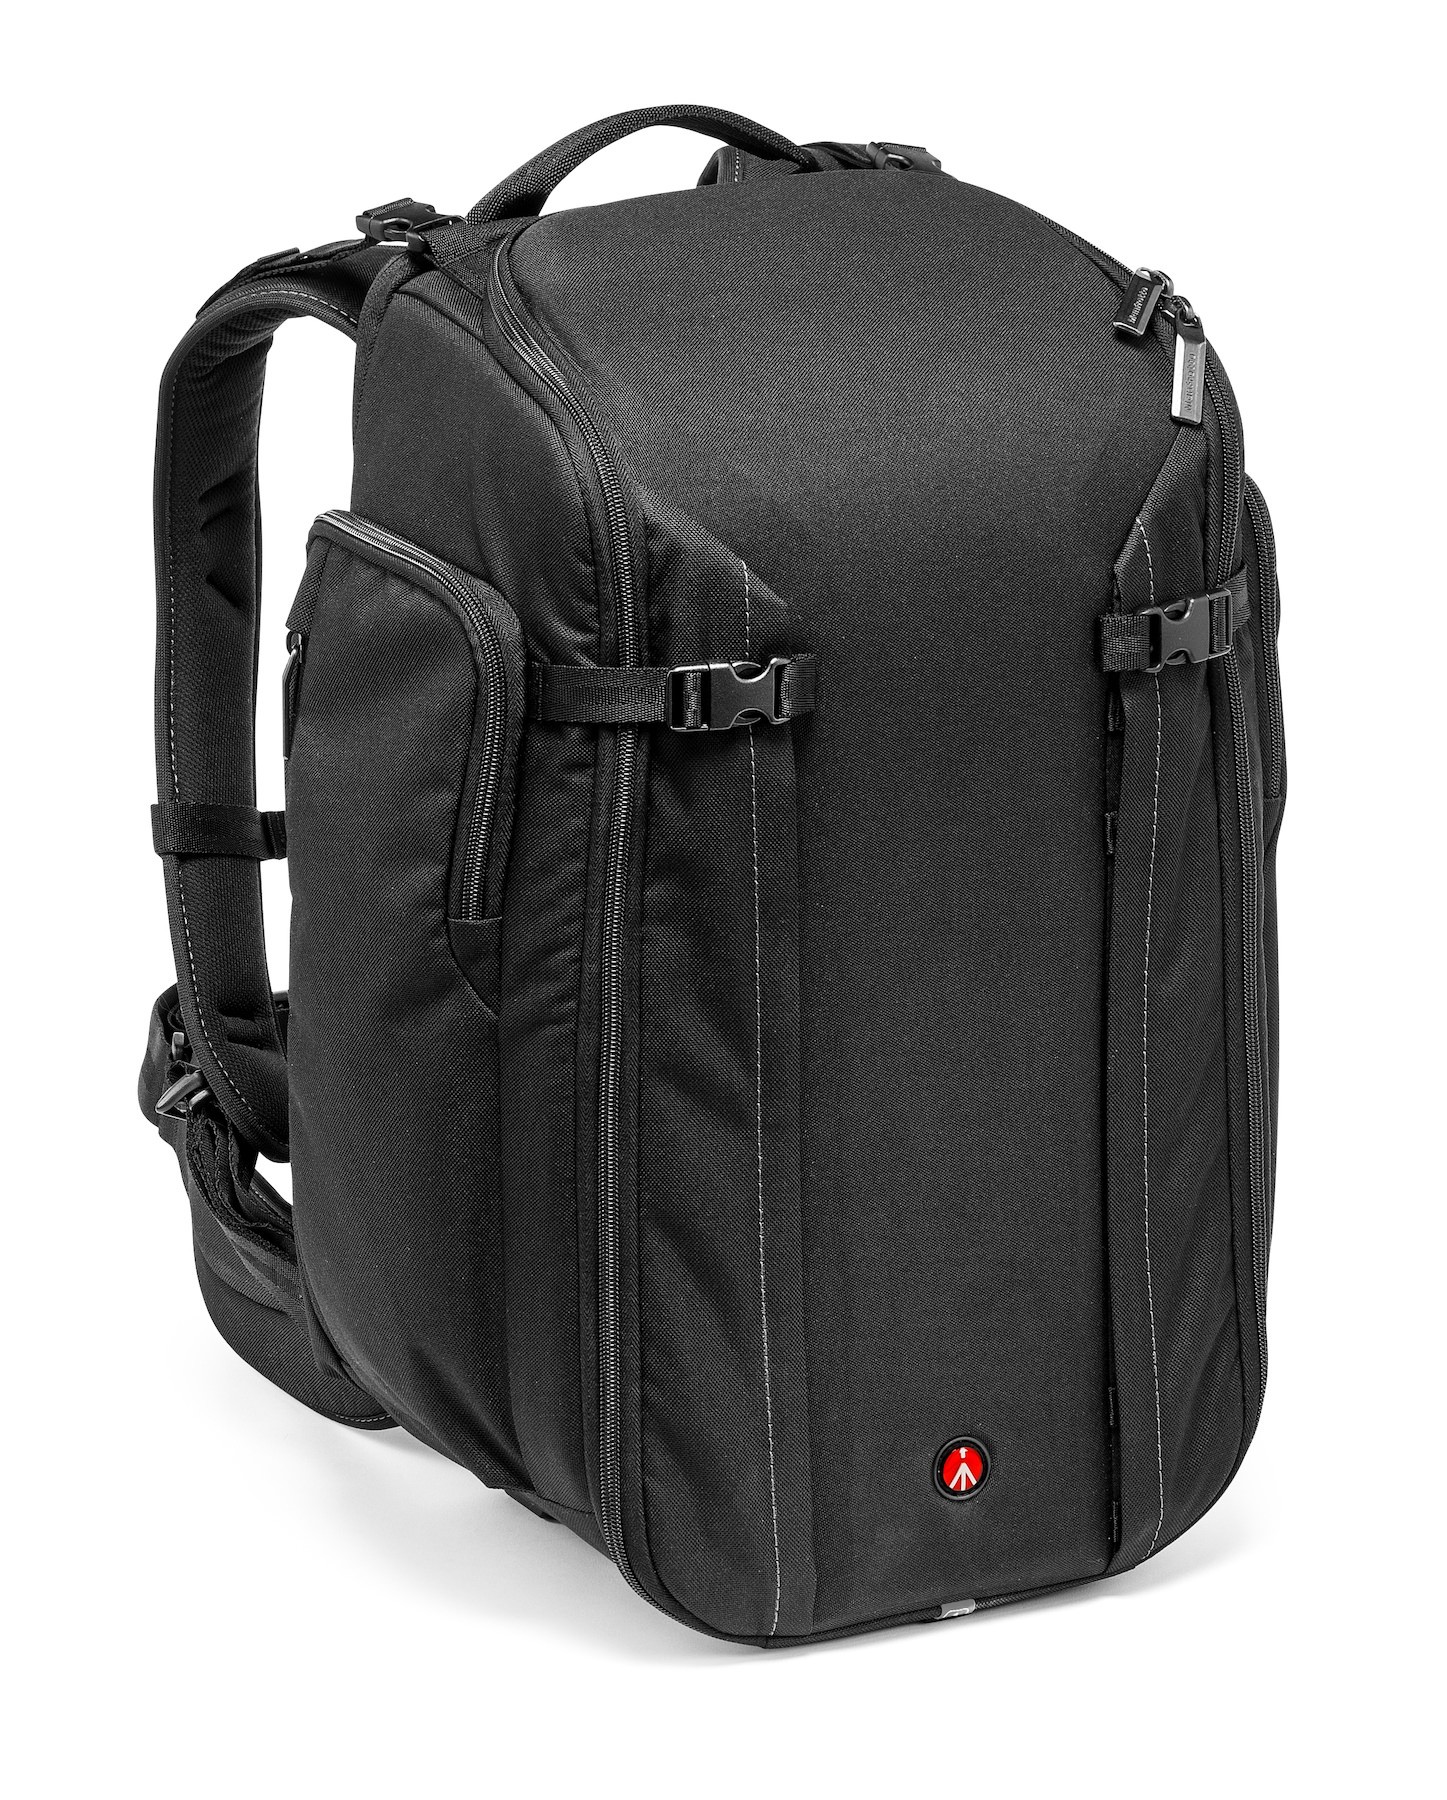 Professional camera backpack f